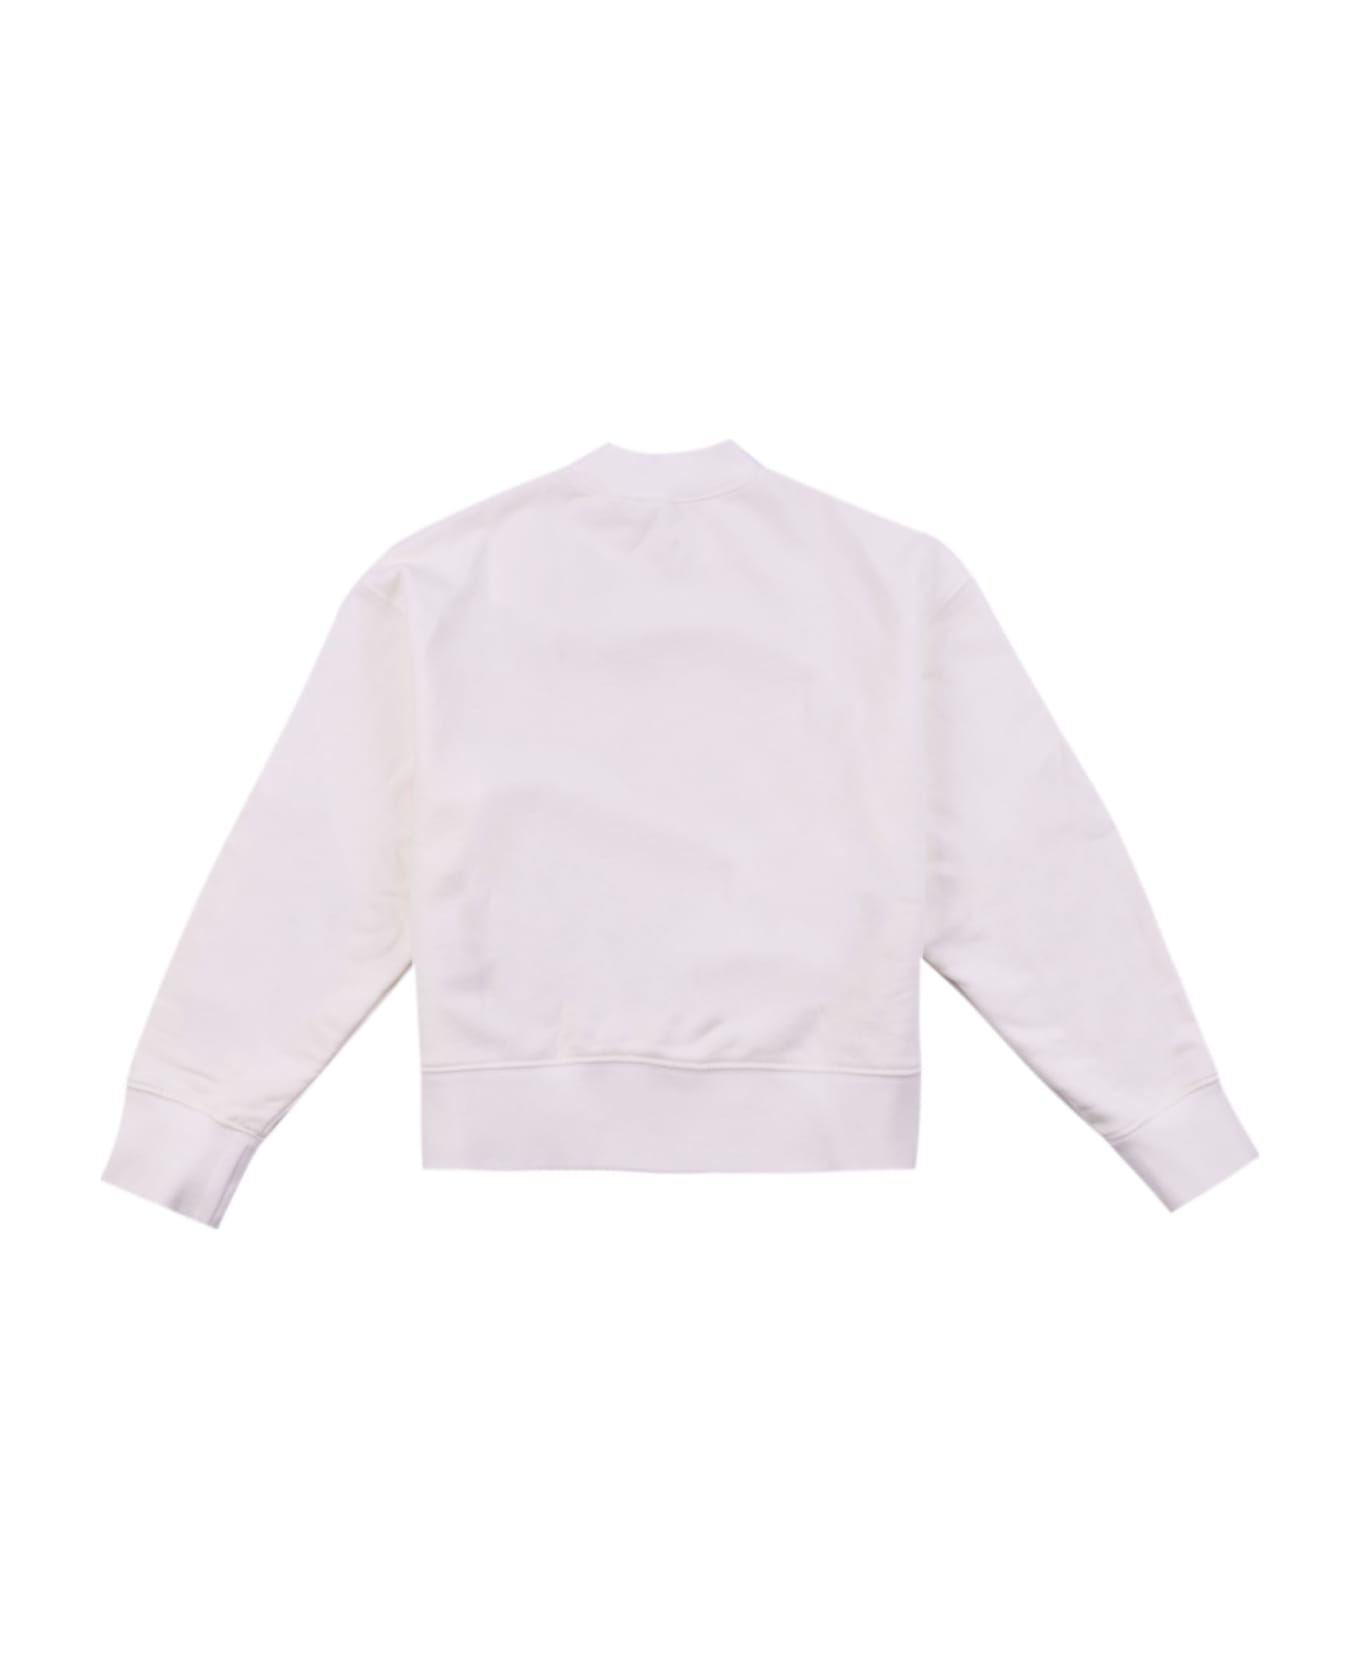 Palm Angels Printed Sweatshirt - White